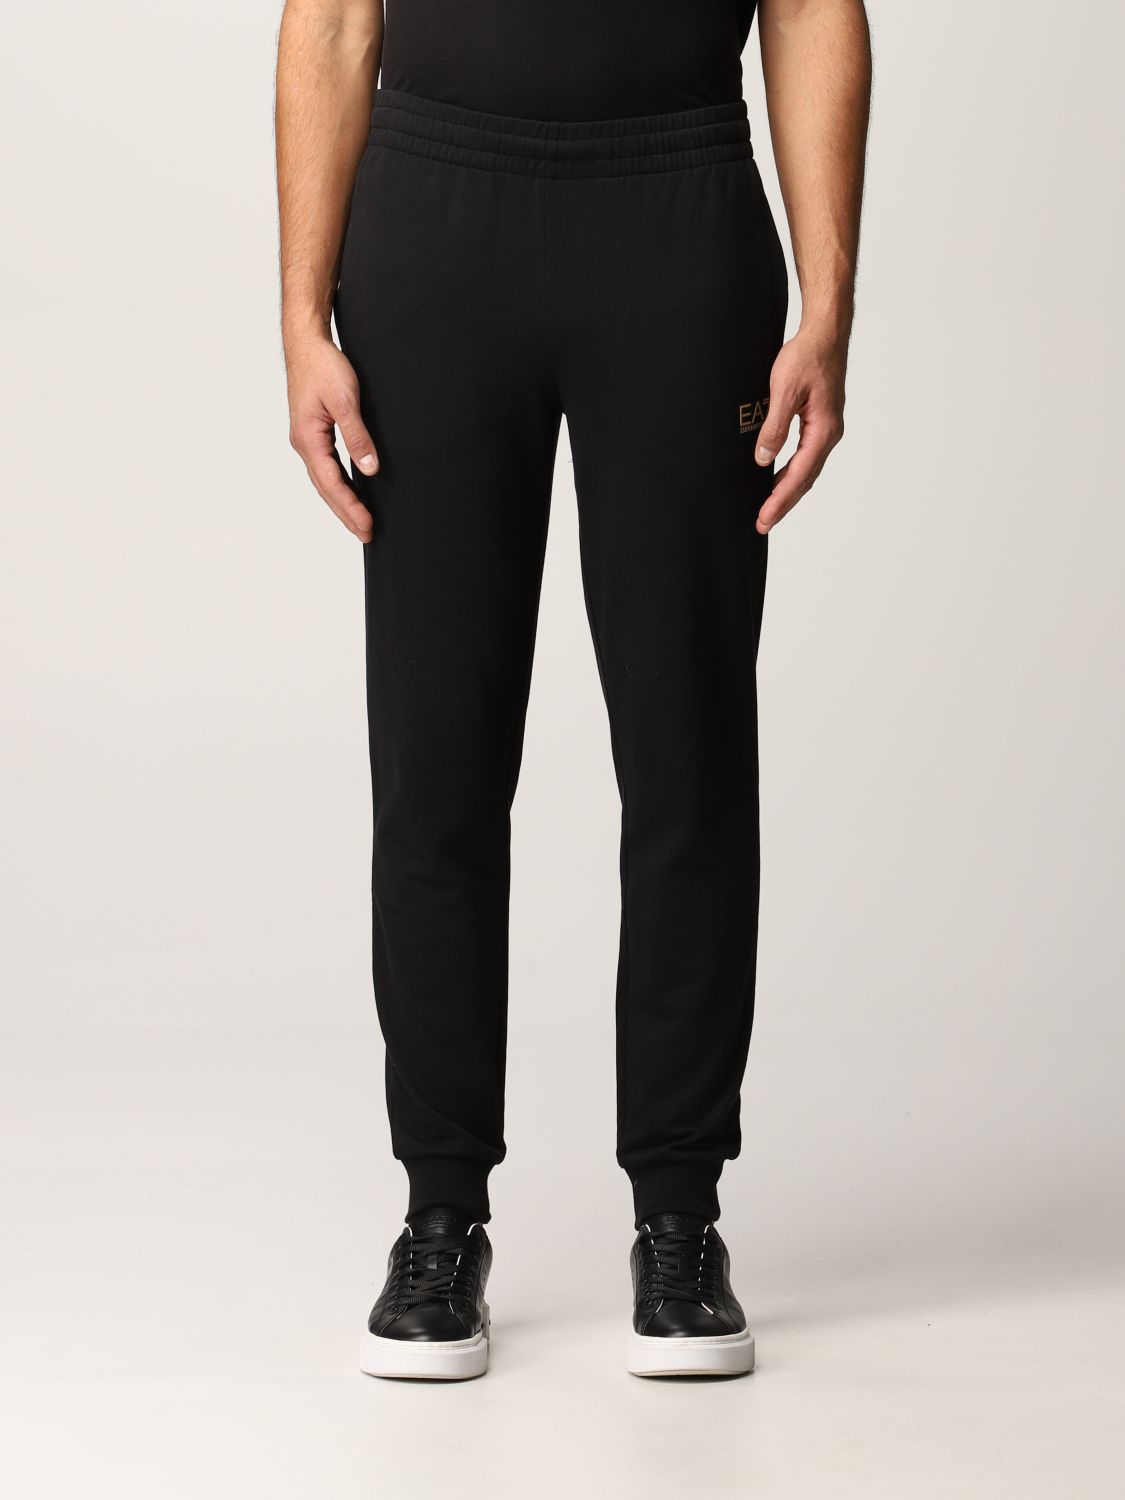 EA7: pants for man - Black | Ea7 pants 8NPP53 PJ05Z online at GIGLIO.COM